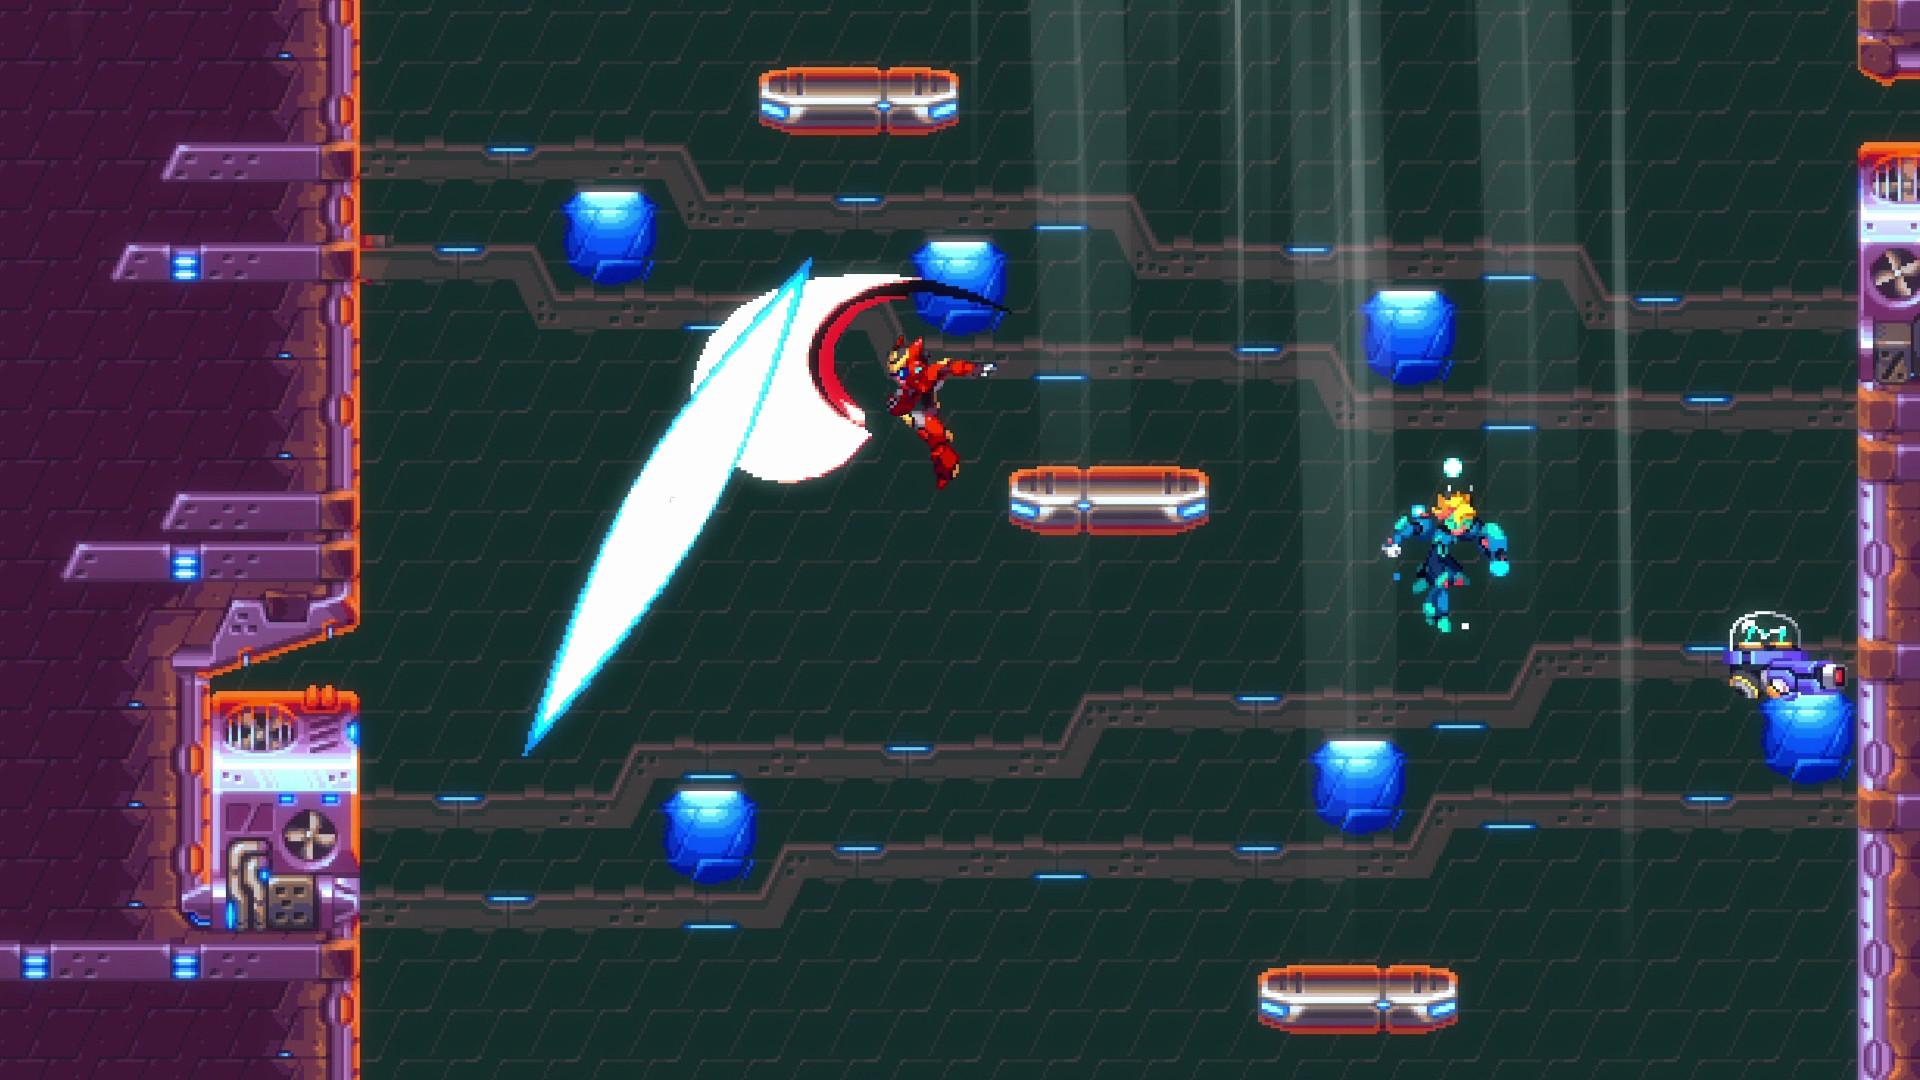 Screenshot №12 from game 30XX